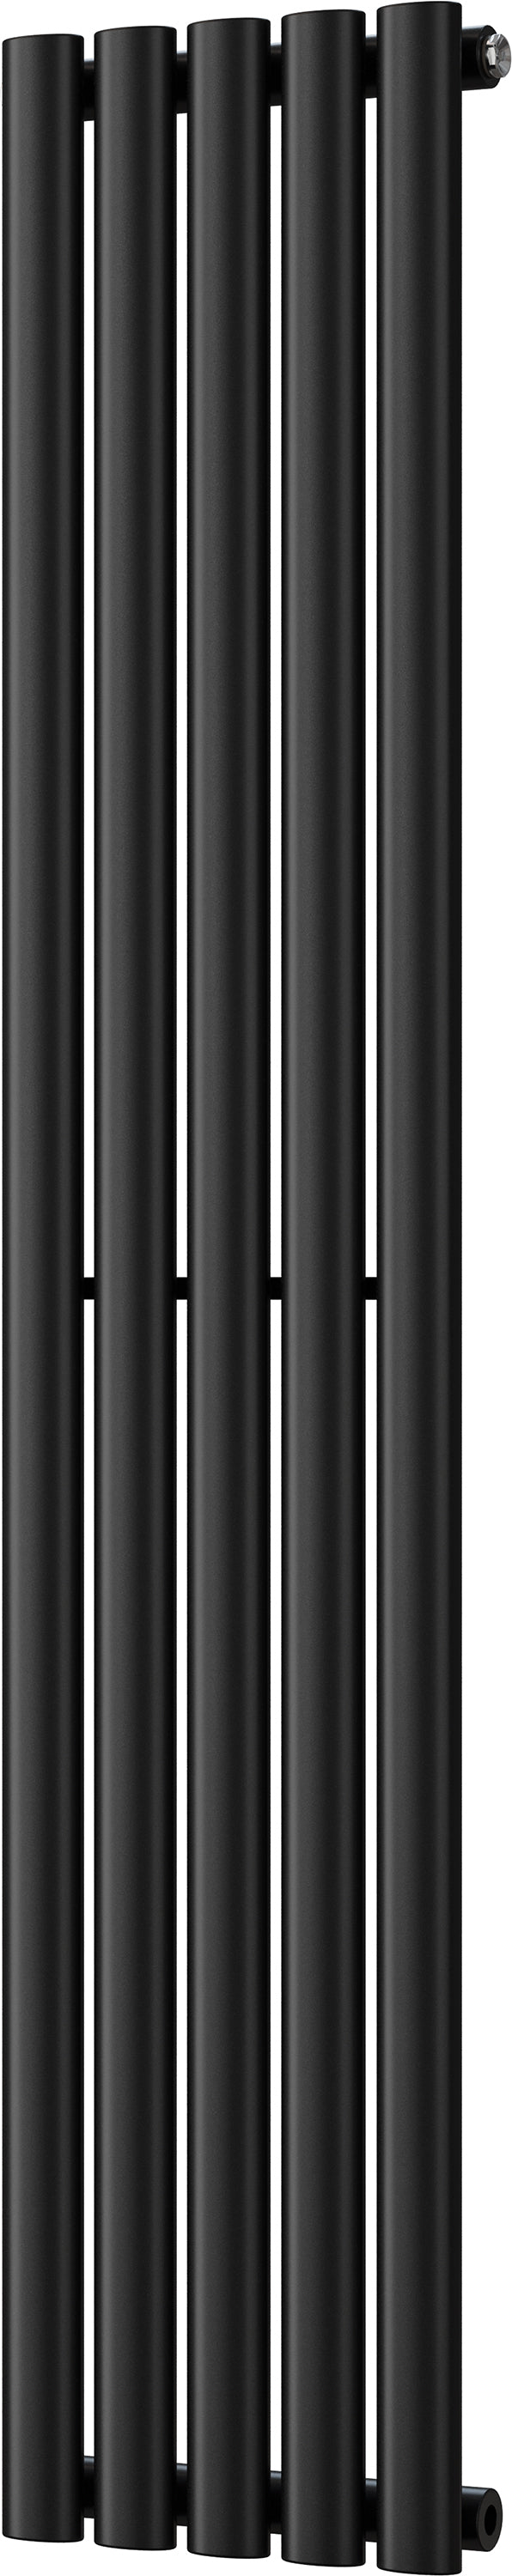 Omeara - Black Vertical Radiator H1400mm x W290mm Single Panel